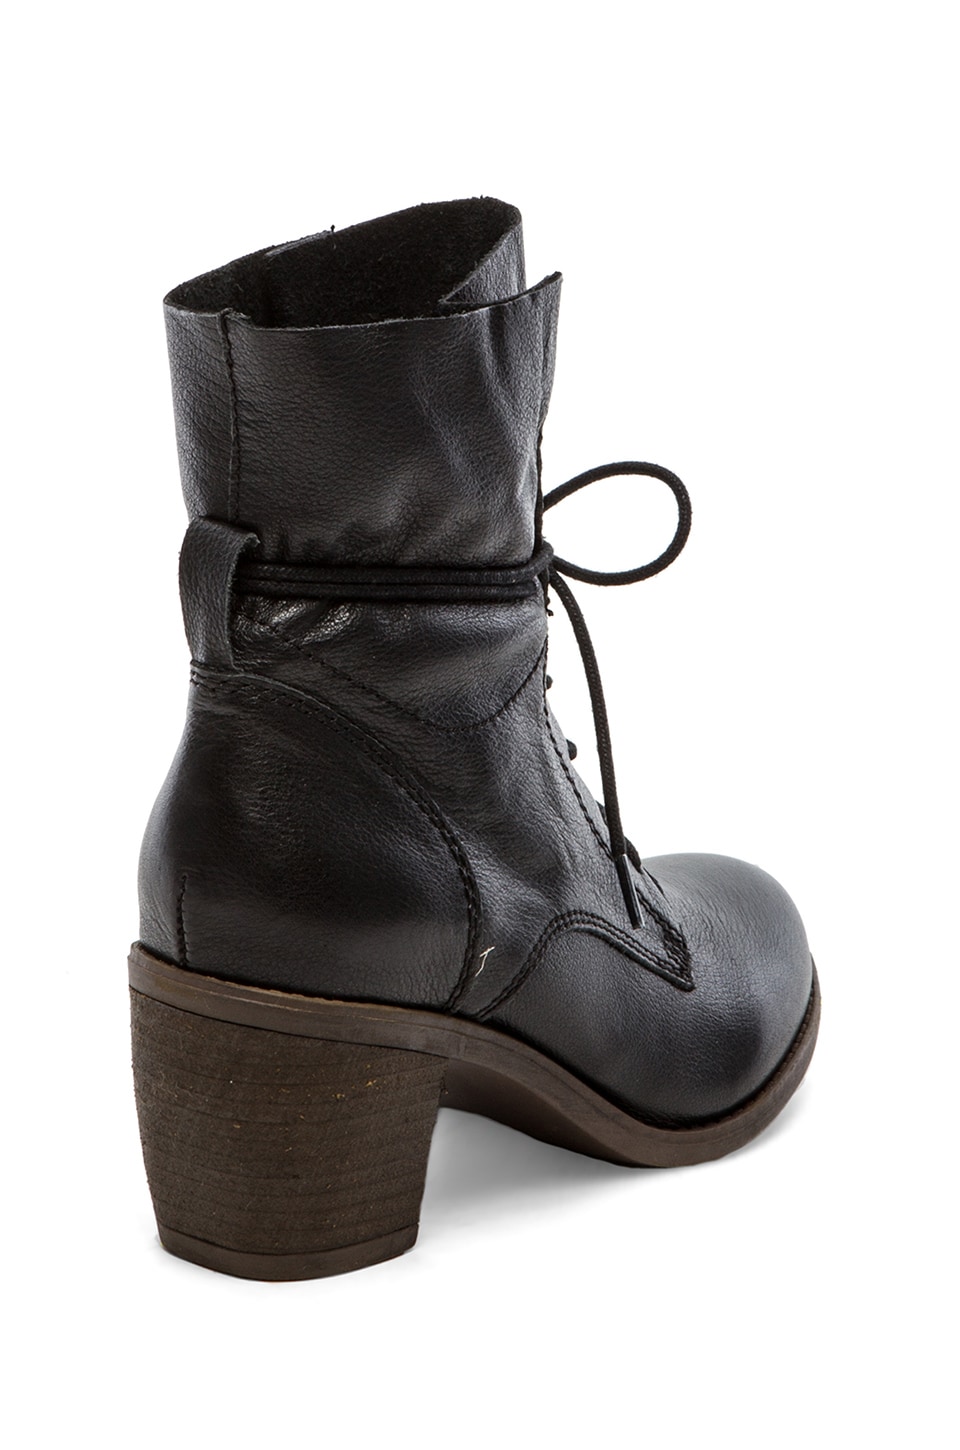 Steve Madden Gretchun Boot in Black Leather | REVOLVE